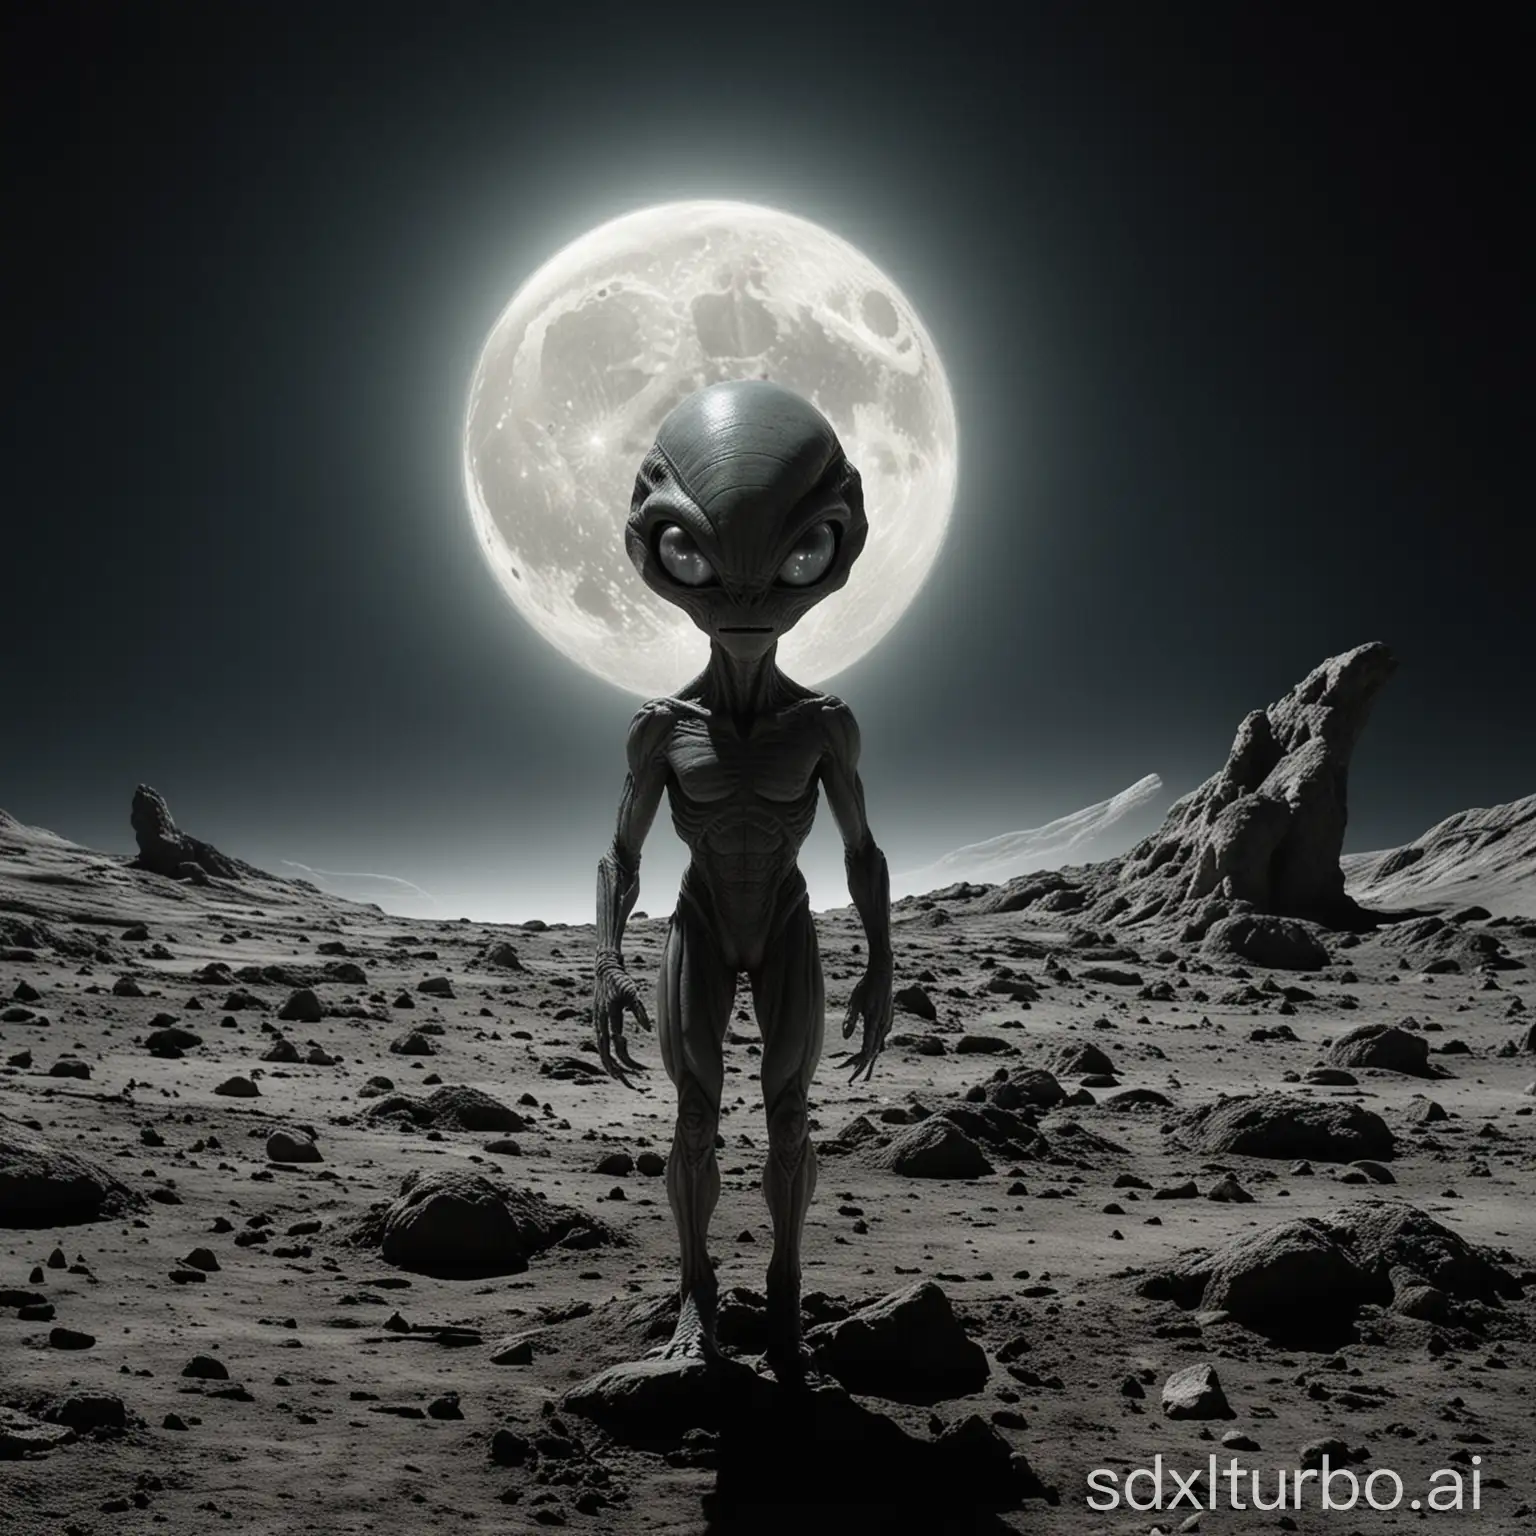 Alien-Exploring-the-Lunar-Surface-under-Earthlight